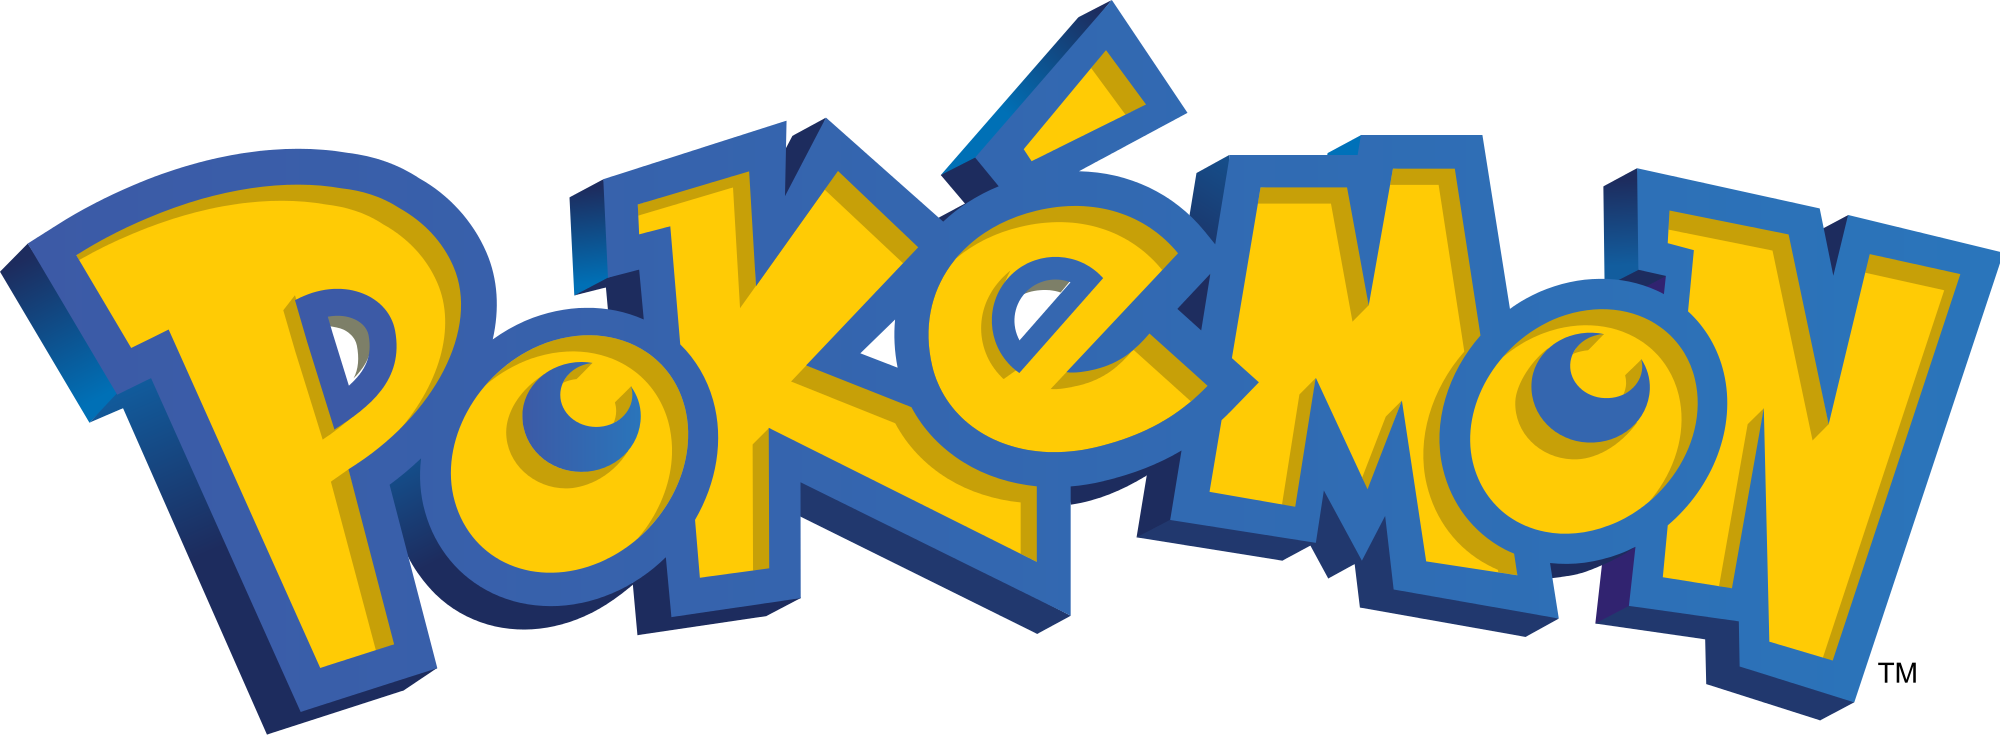 English_Pokémon_logo.svg_.png